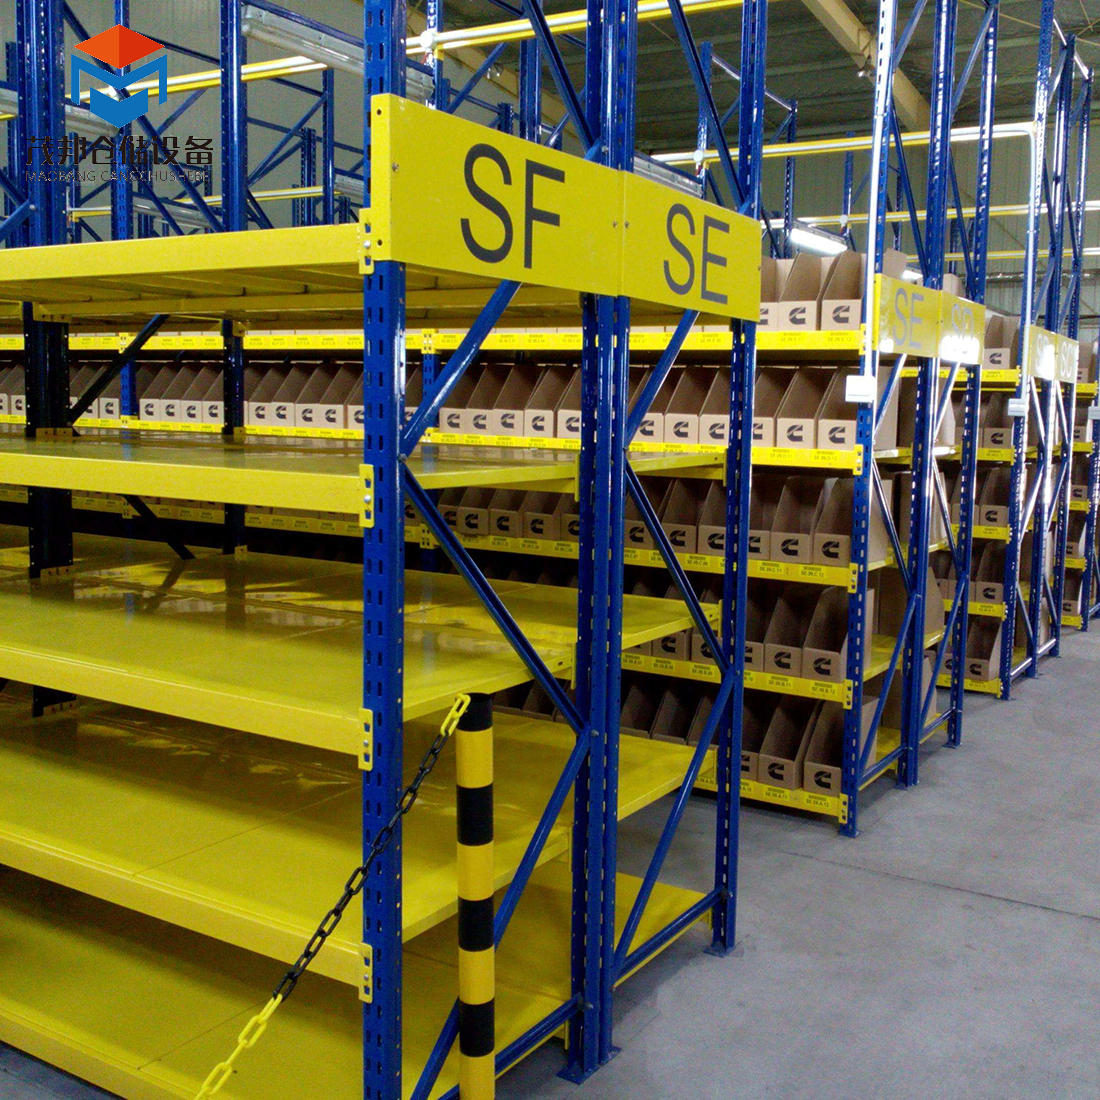 Storage racks very narrow aisle pallet rack system Featured Image